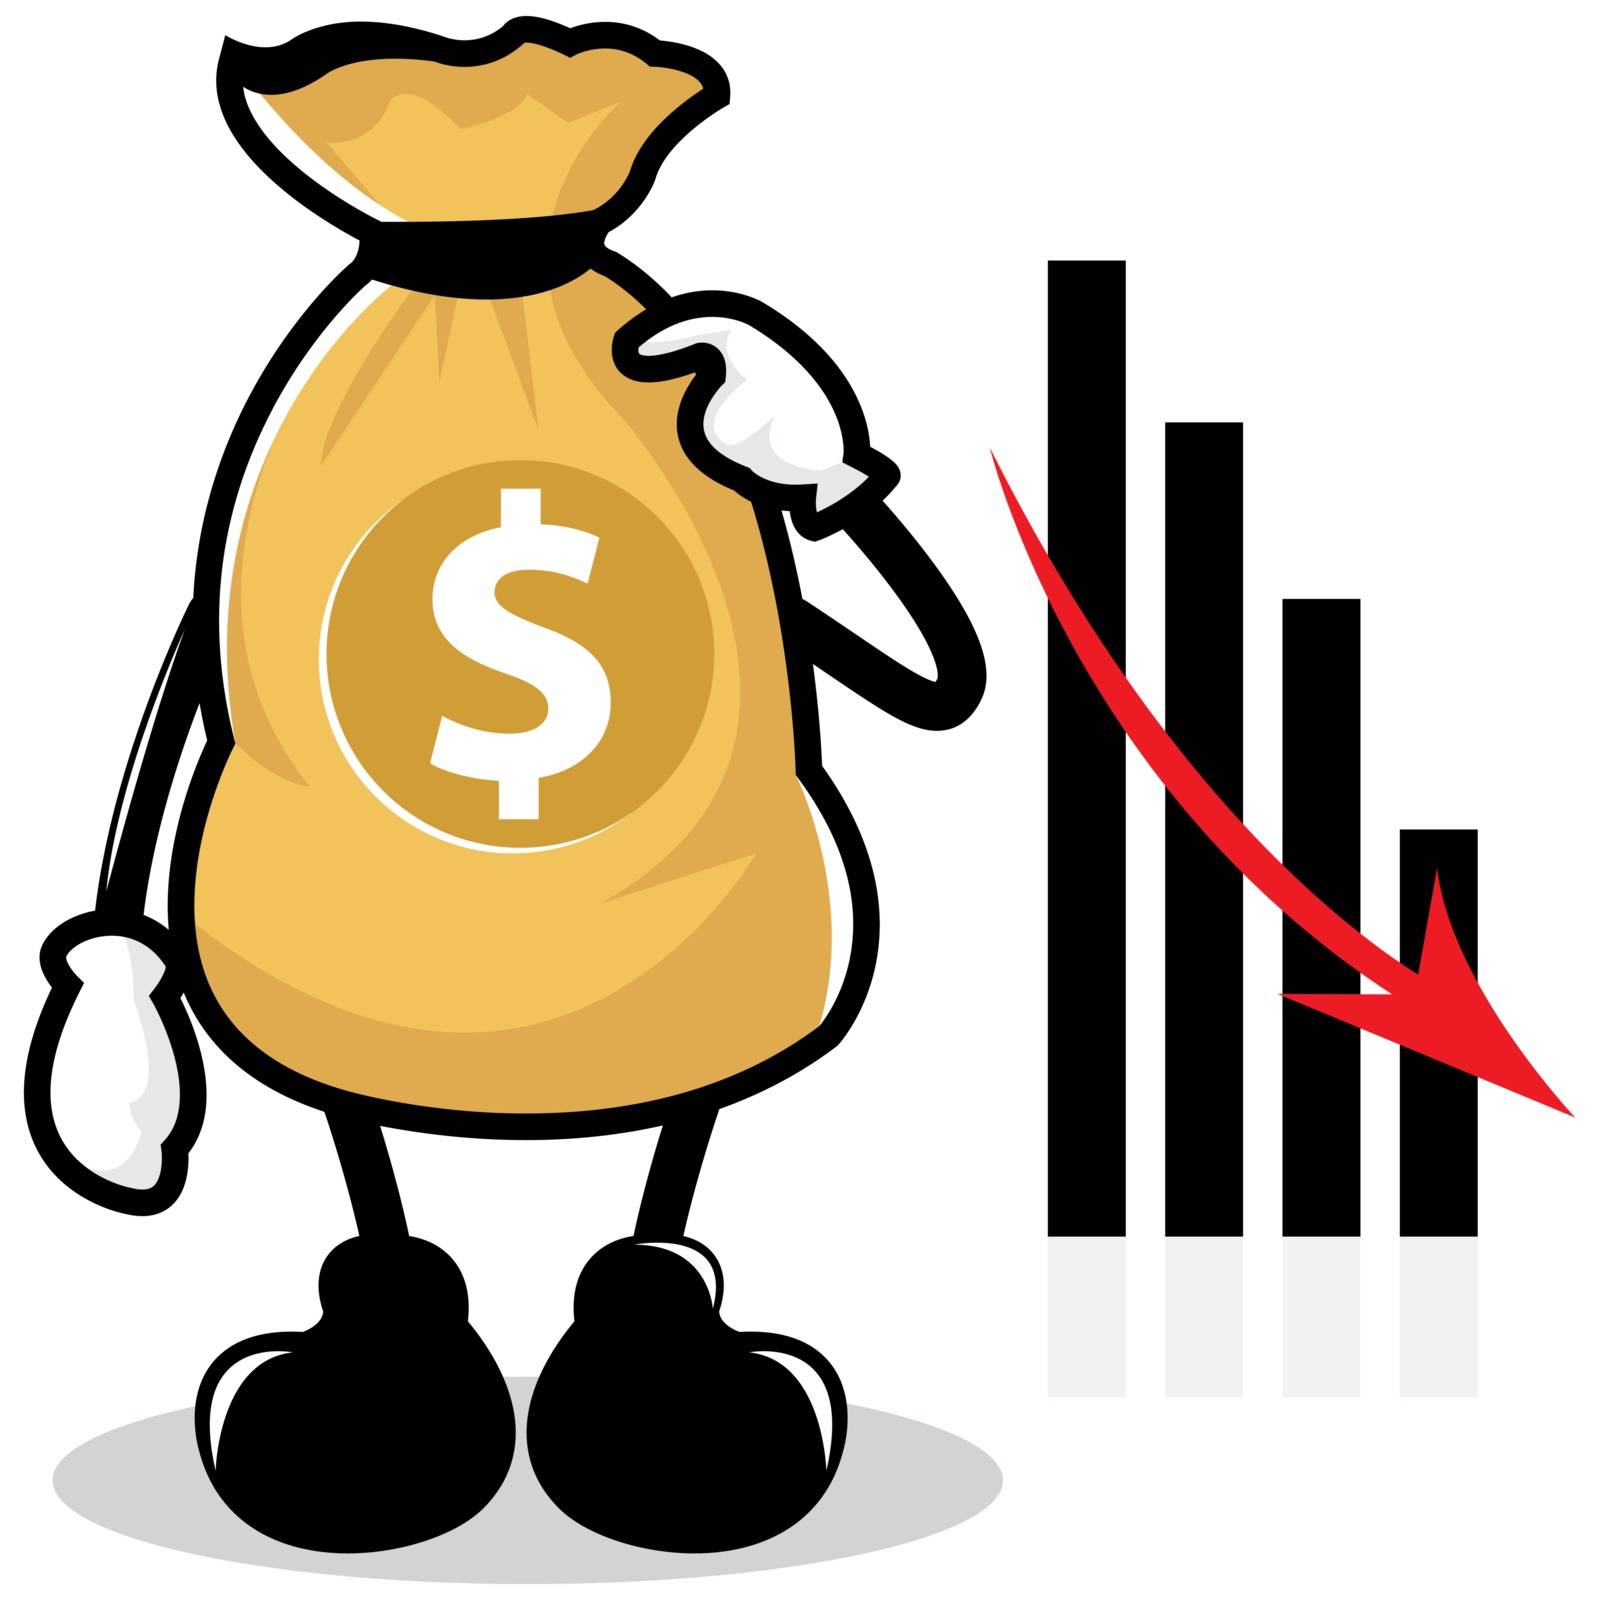 Illustration of Decreased Profits with Money Bag Character on White Background